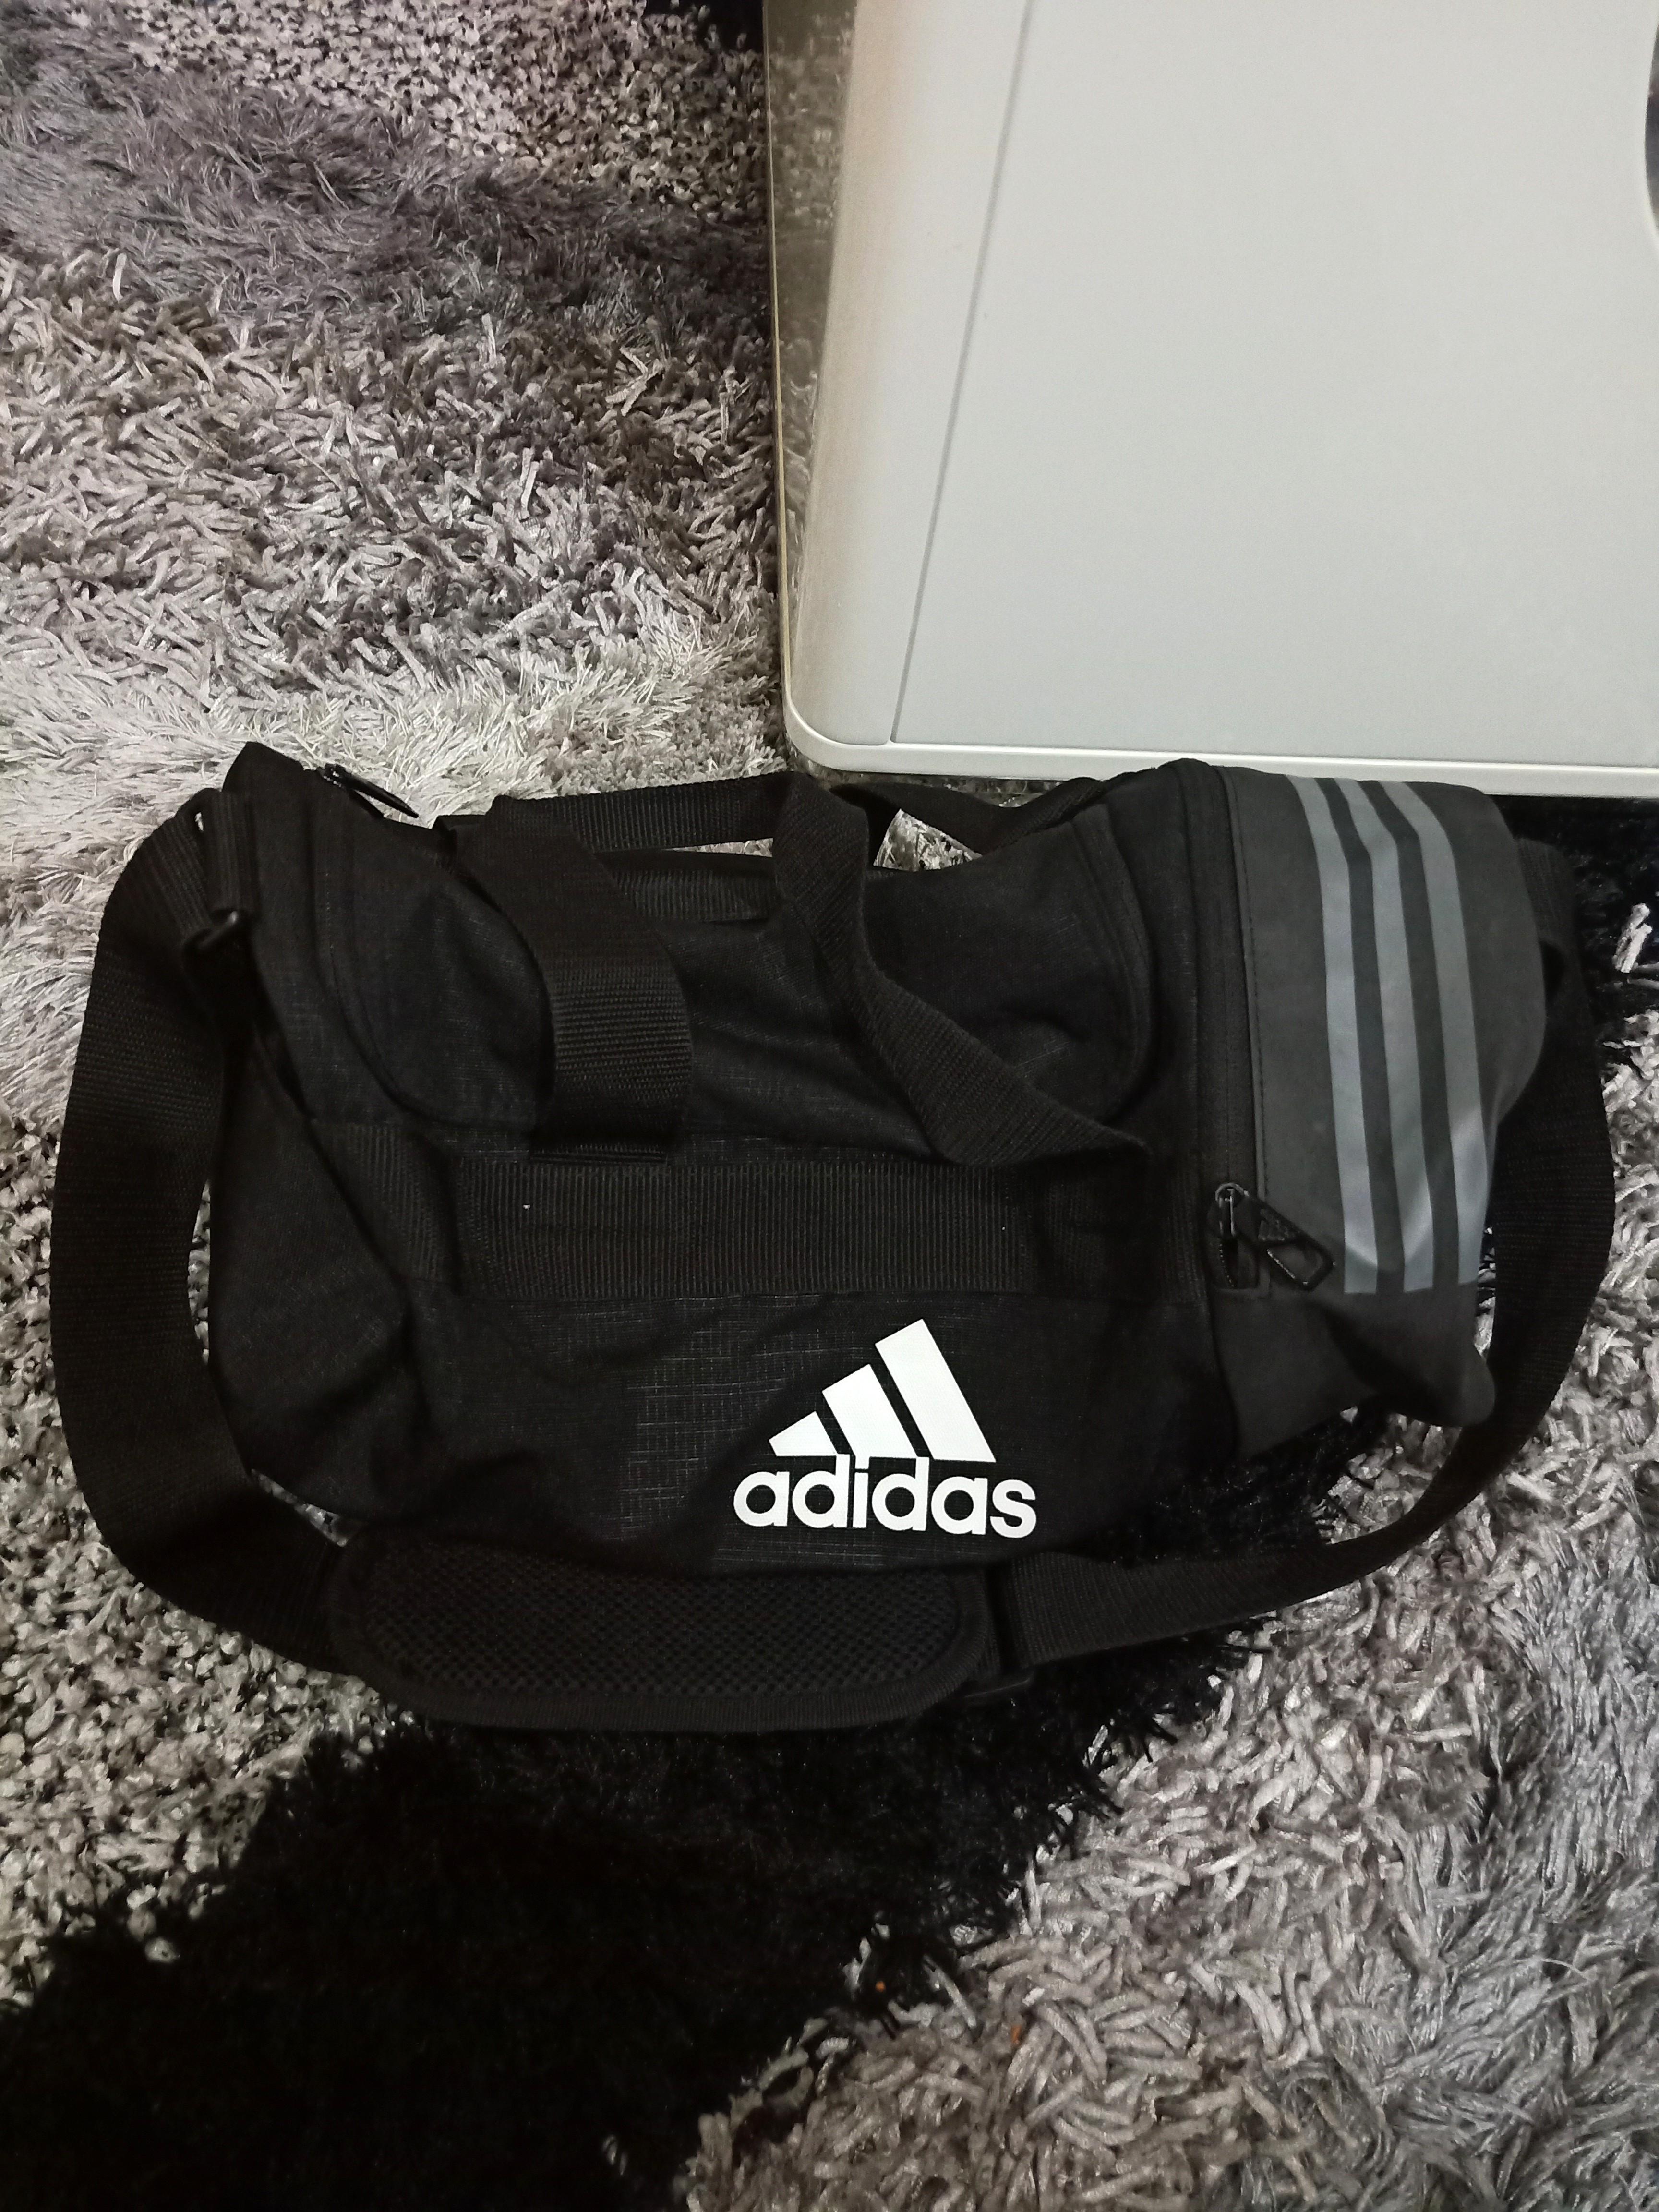 adidas small duffel bag